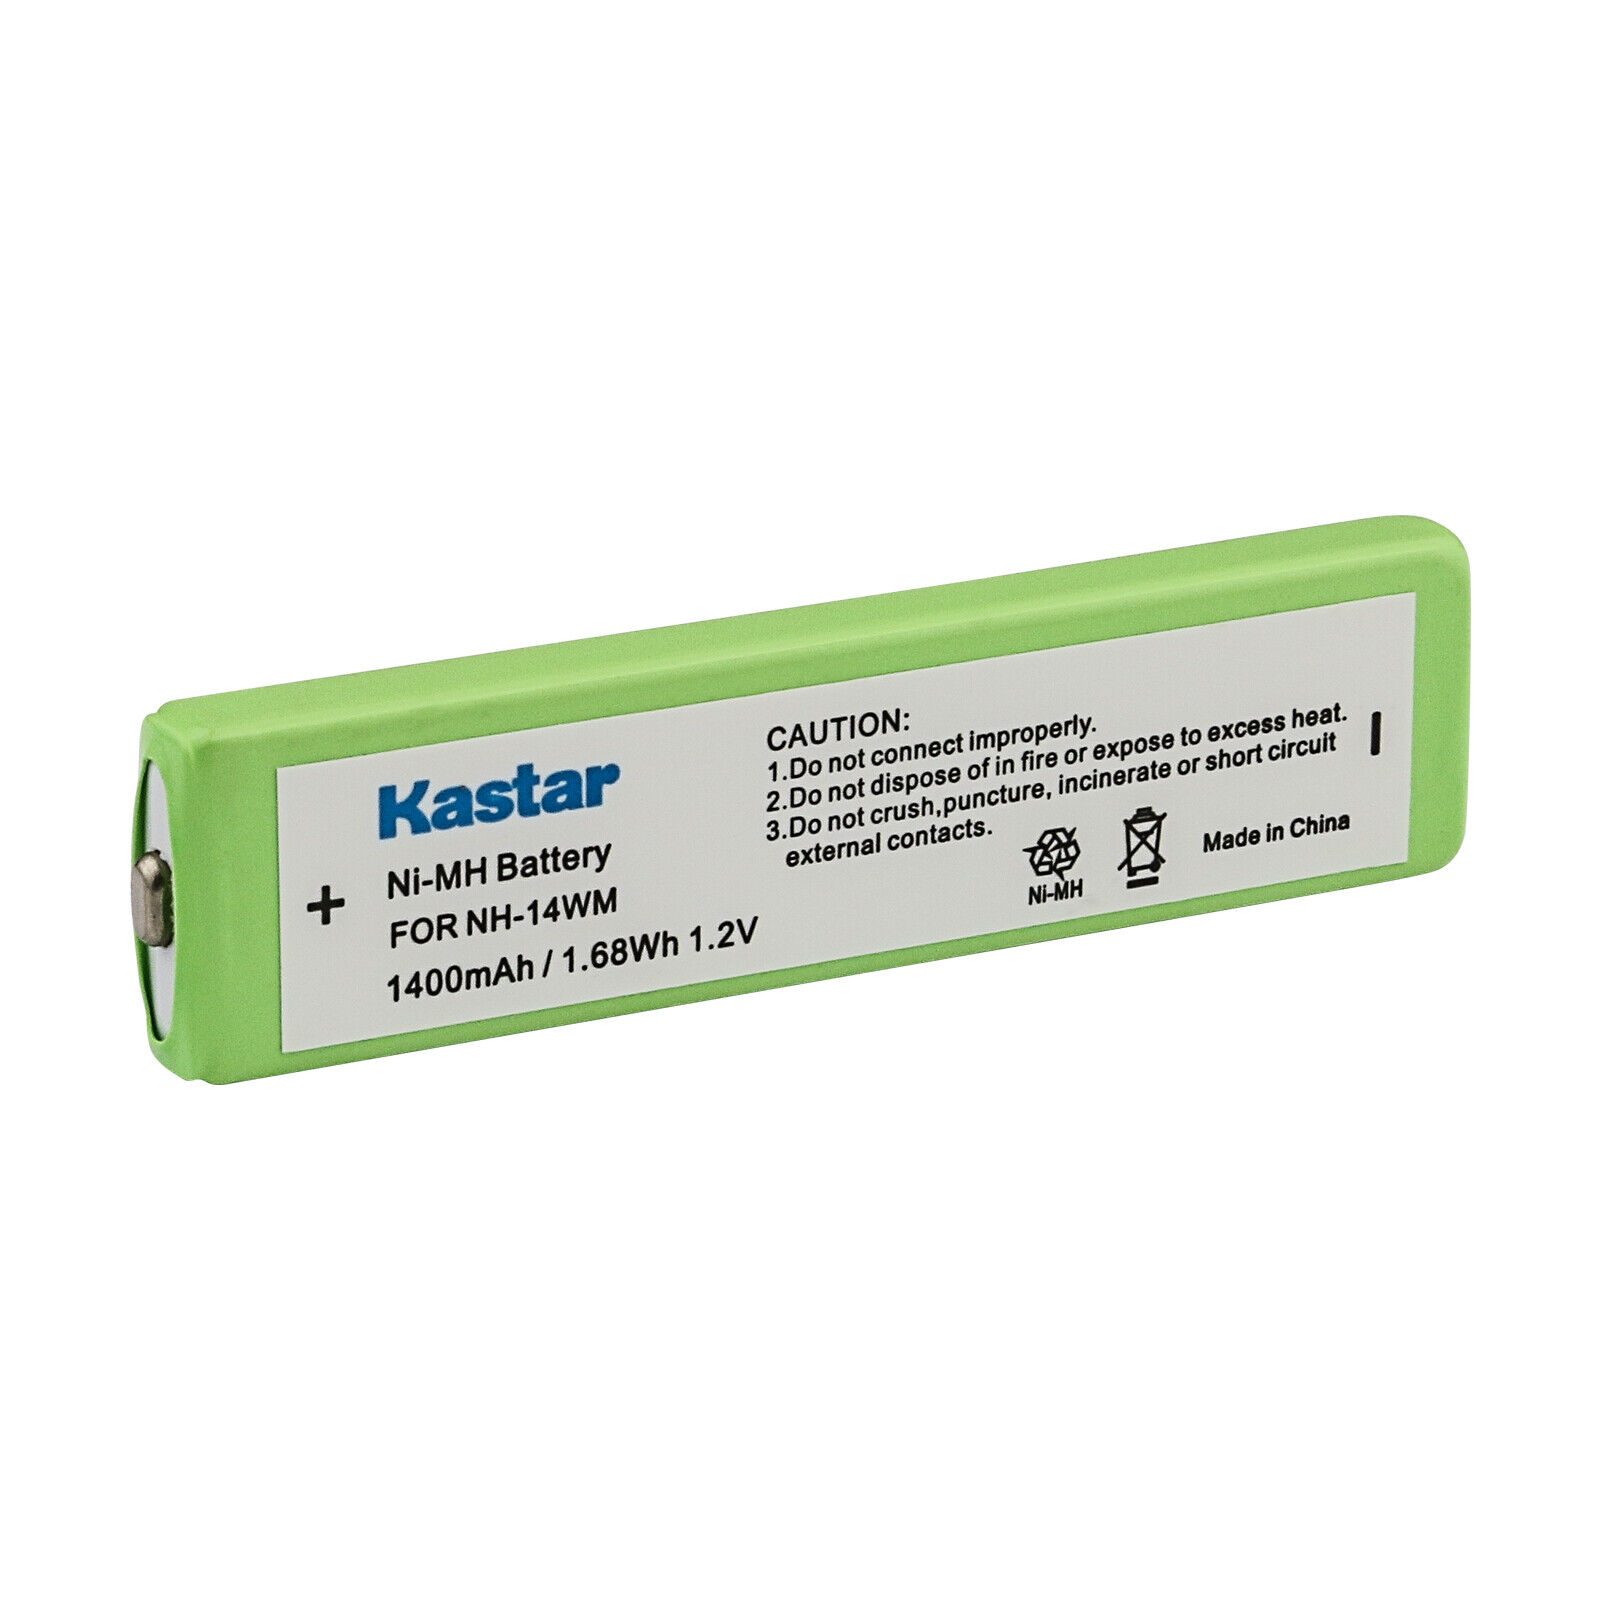 Kastar Gumstick Battery for Sony NW-MS9, NW-MS11, TCM-80V, WM-EX190, WM-EX615